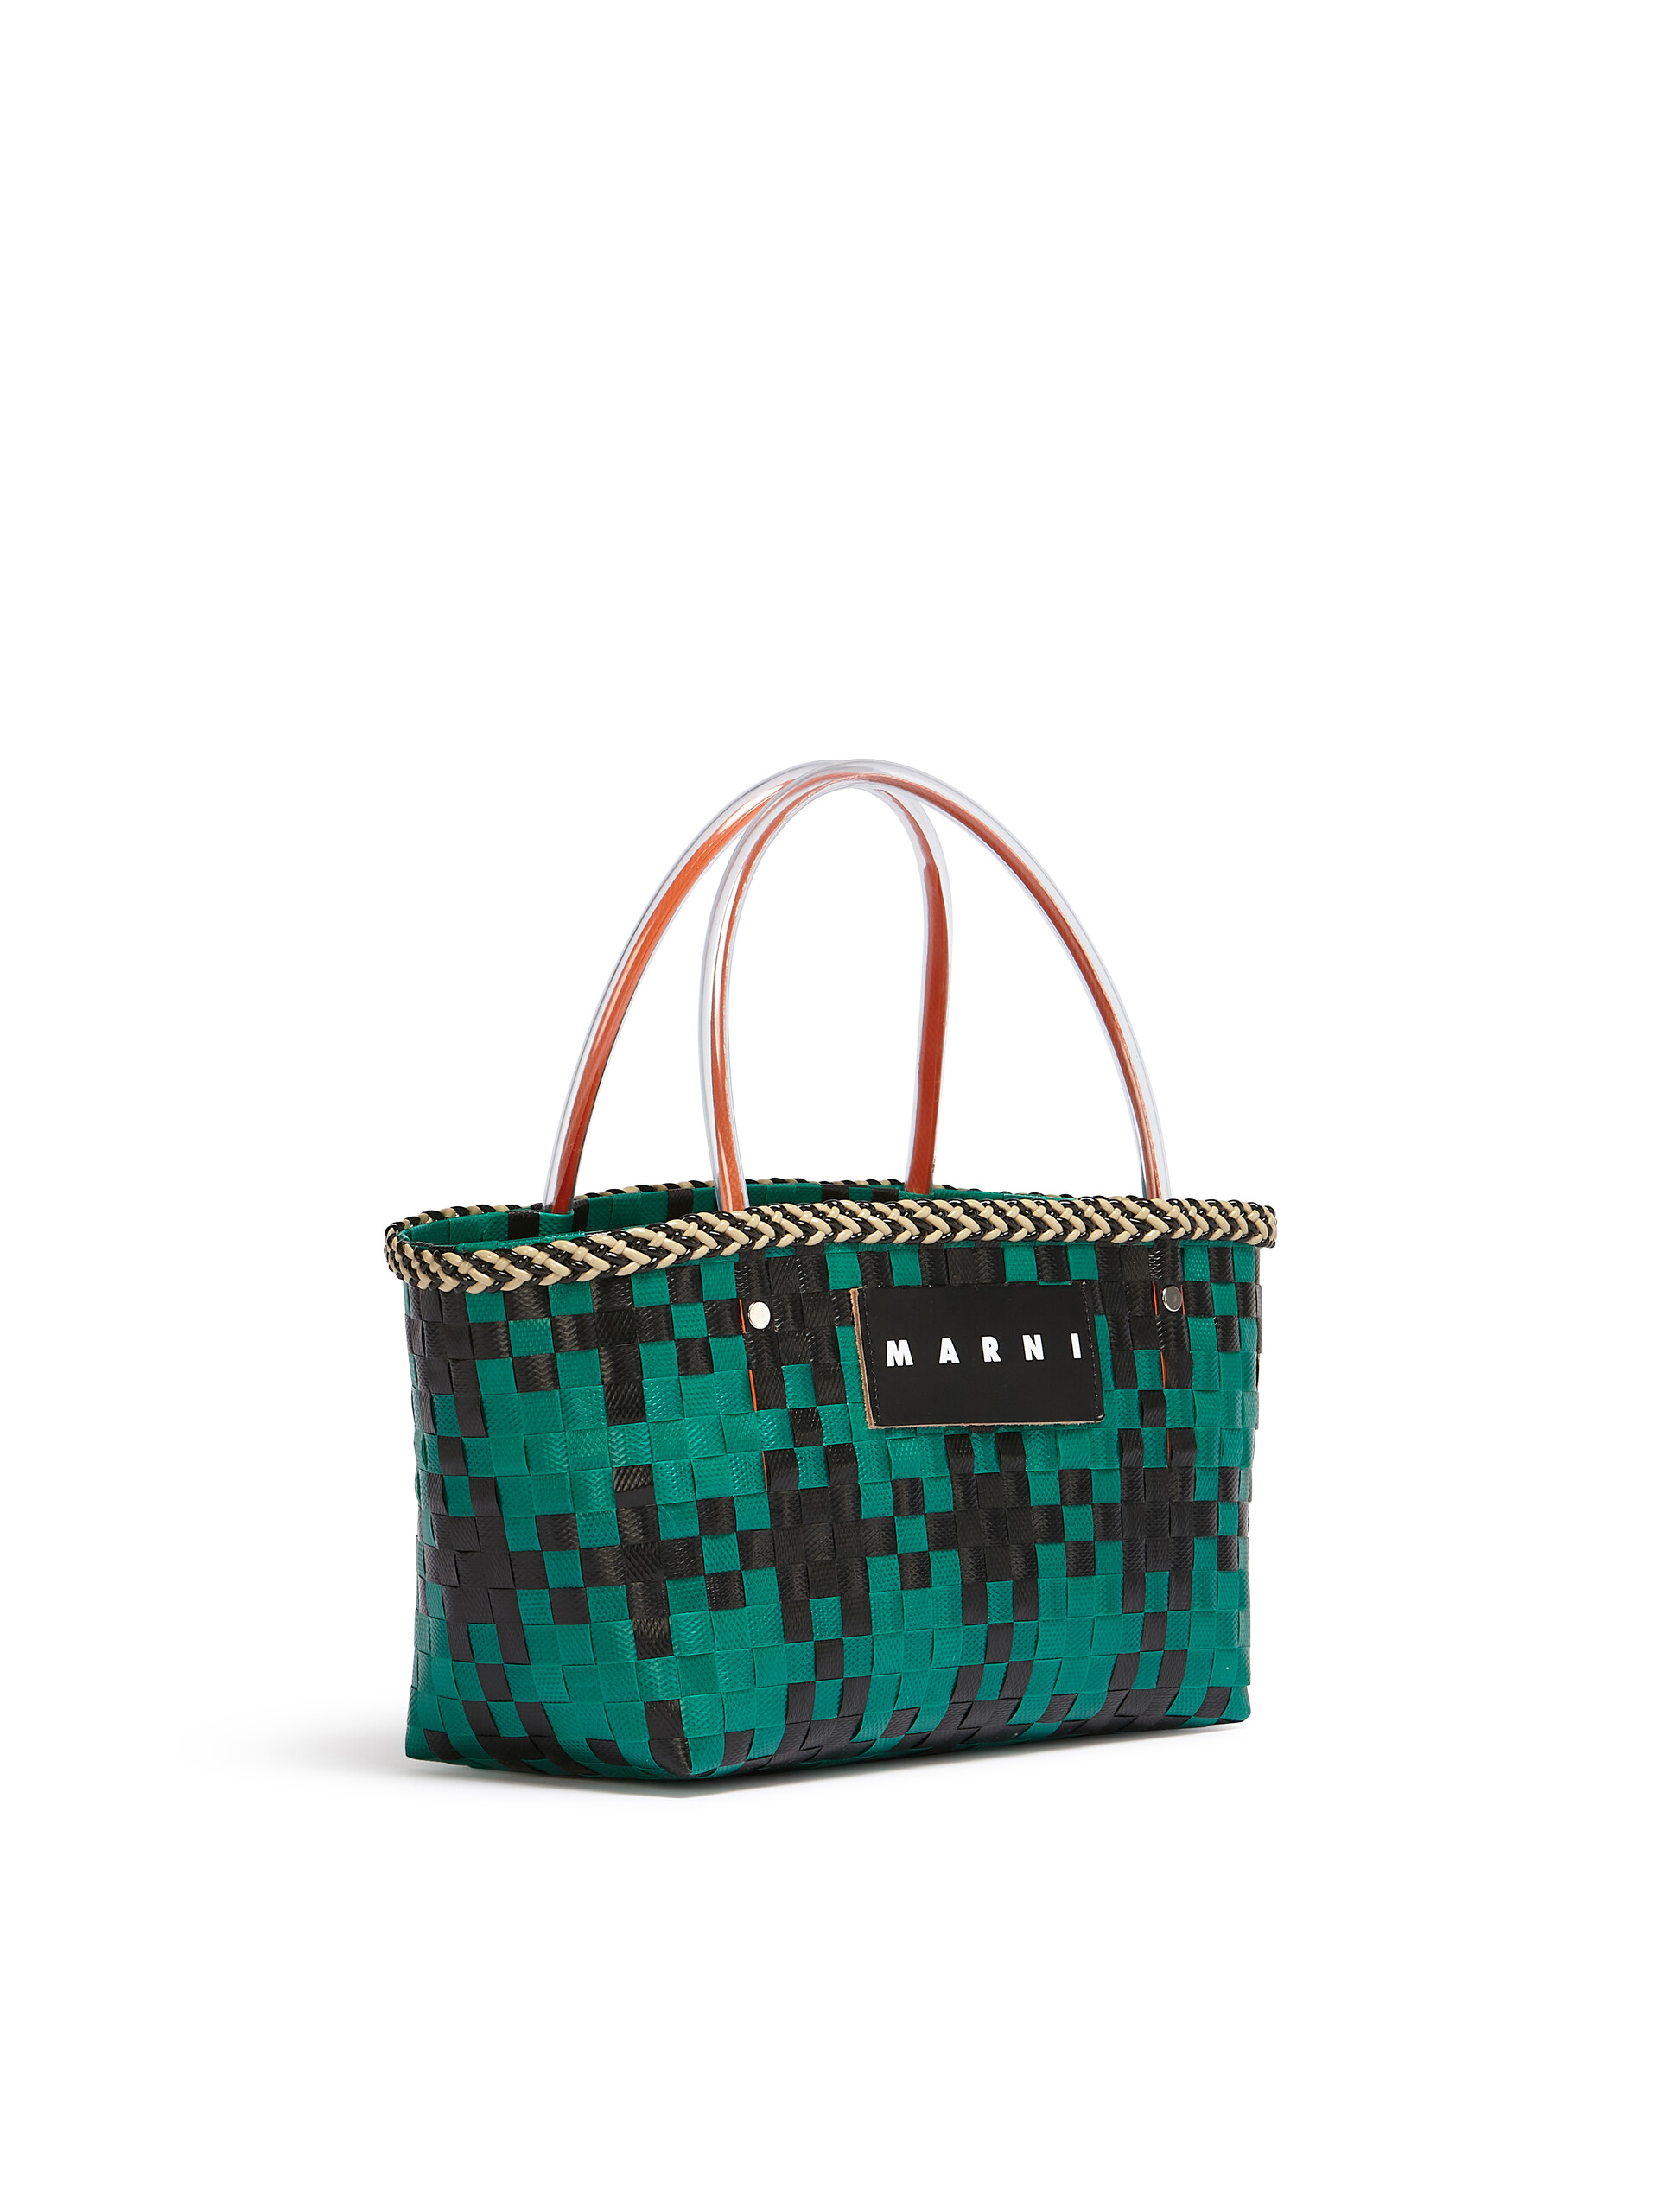 MARNI MARKET CHECK BAG in black and green tartan woven material - Shopping Bags - Image 2